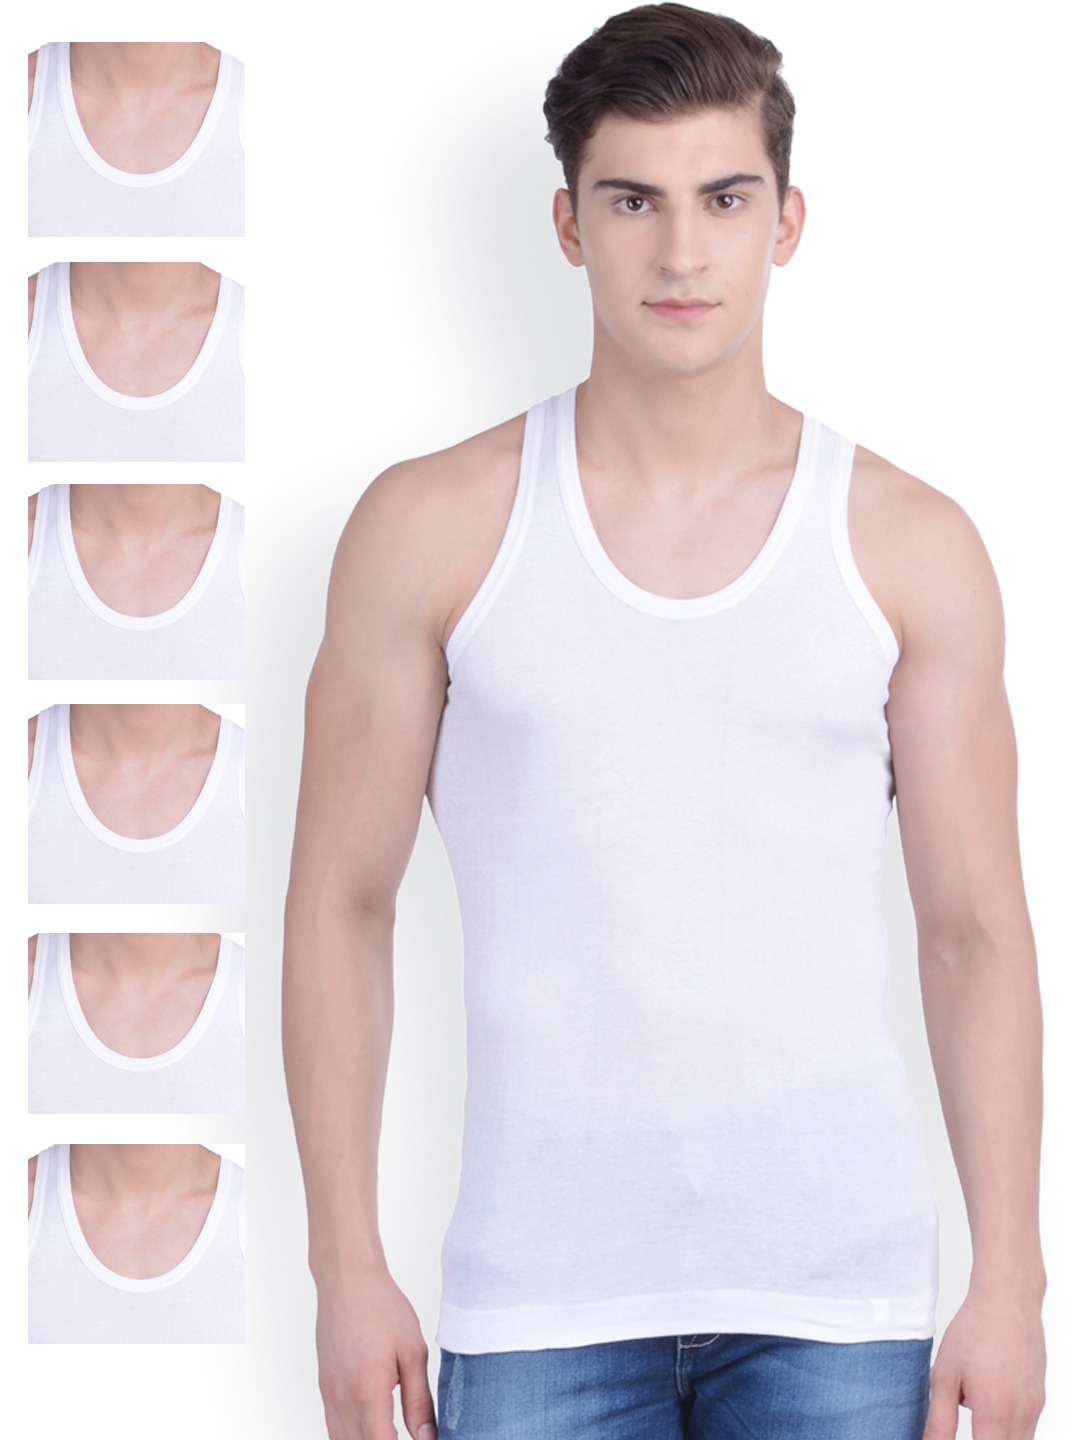 Clothing Innerwear Vests | Dollar Bigboss Pack of 7 White Innerwear Vests MDVE-05-PO7 - XJ80166